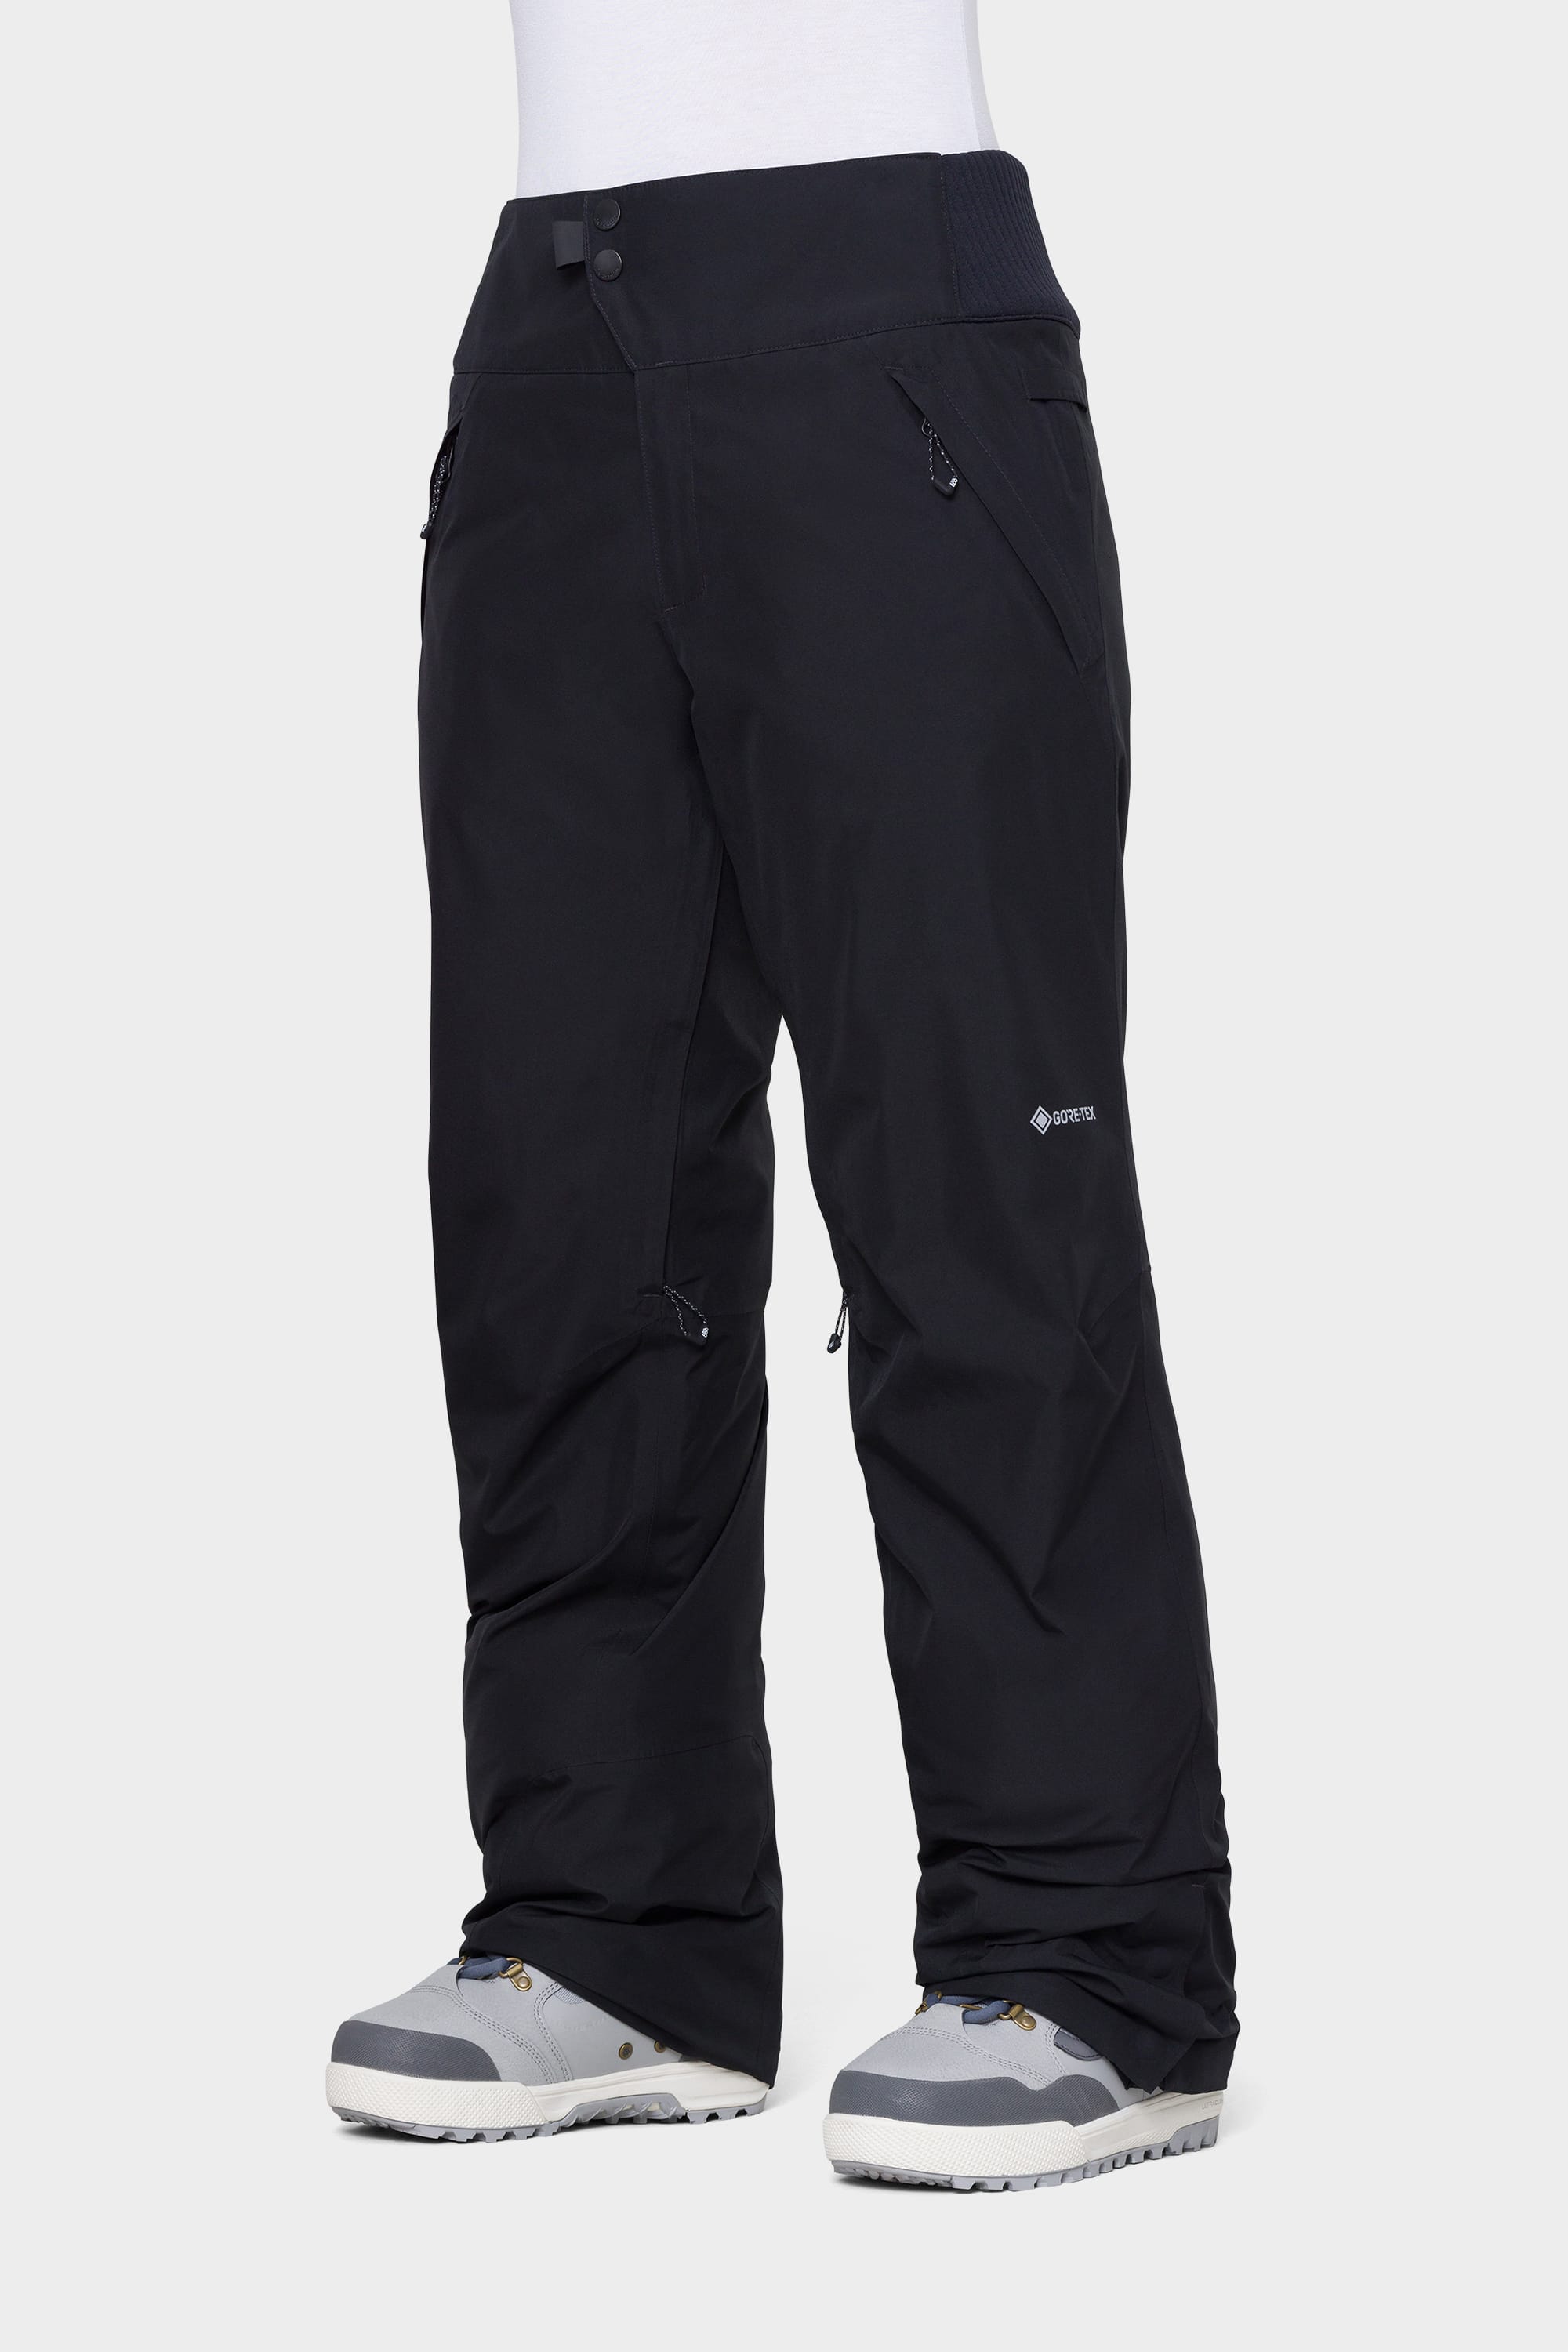 Black Dot Insulated Women's Ski/Snowboard Pants Size Women Large Color  Black Con